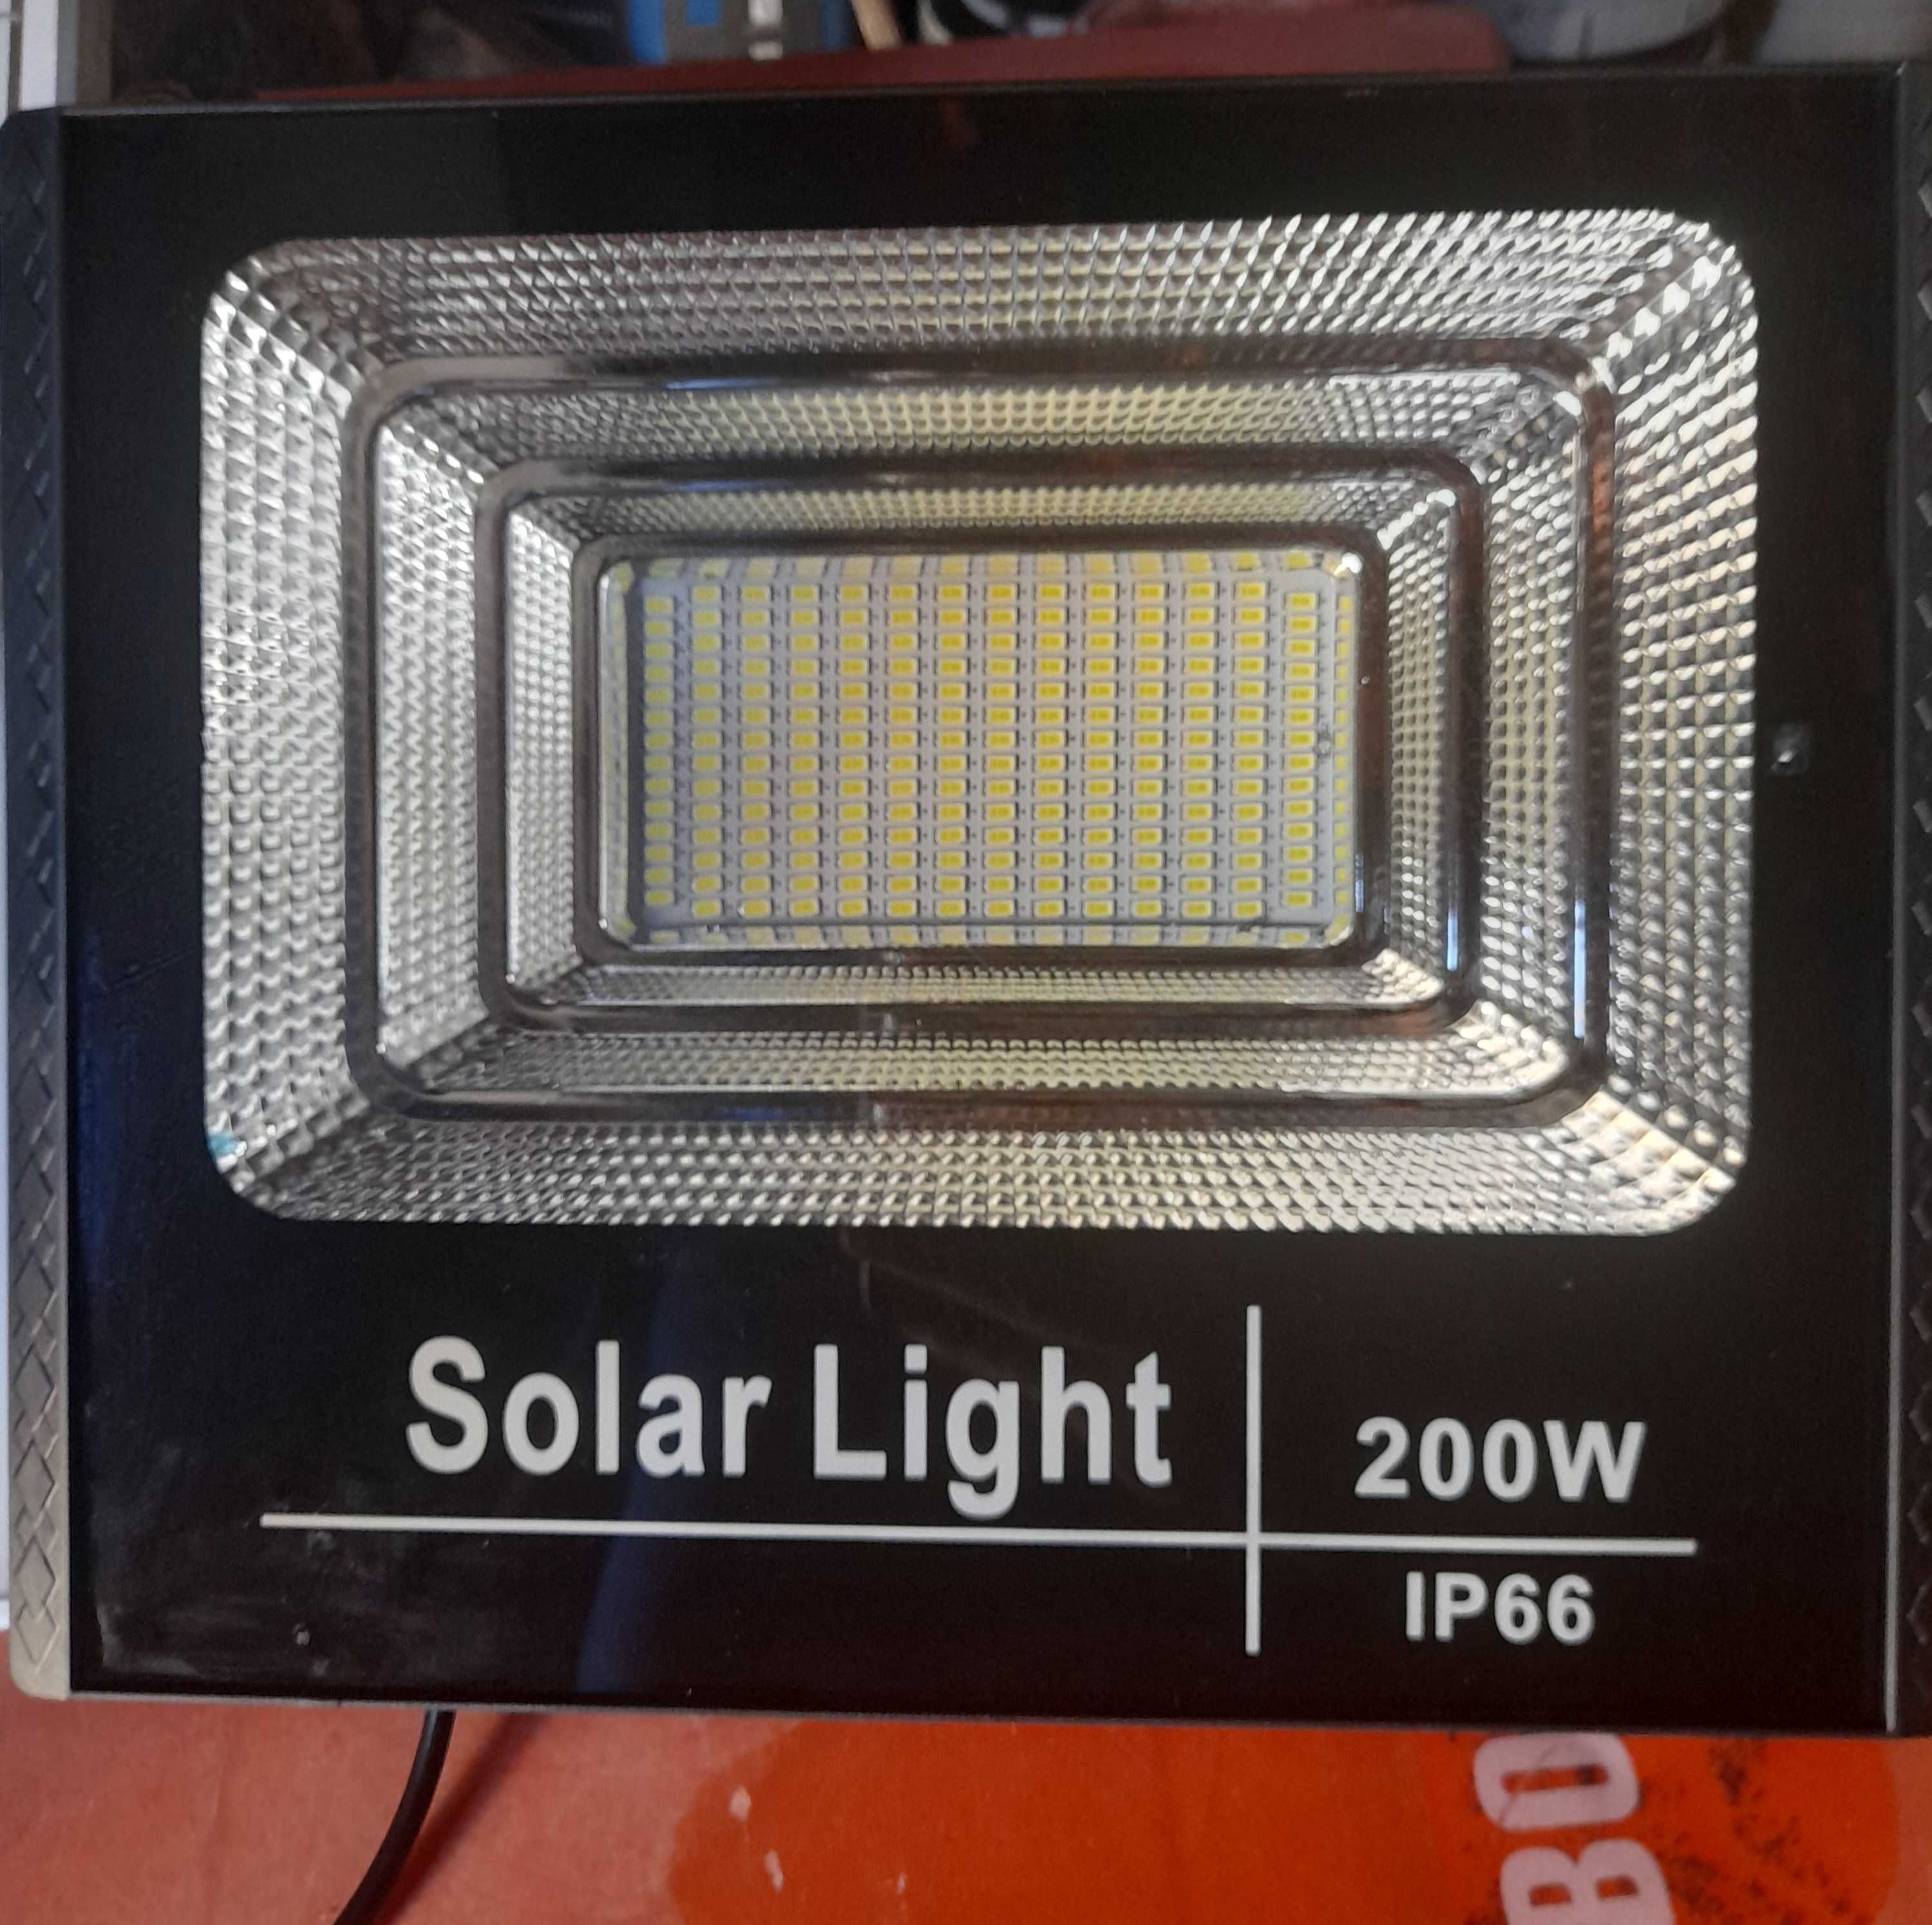 Vendo projector de 200w  com painel solar